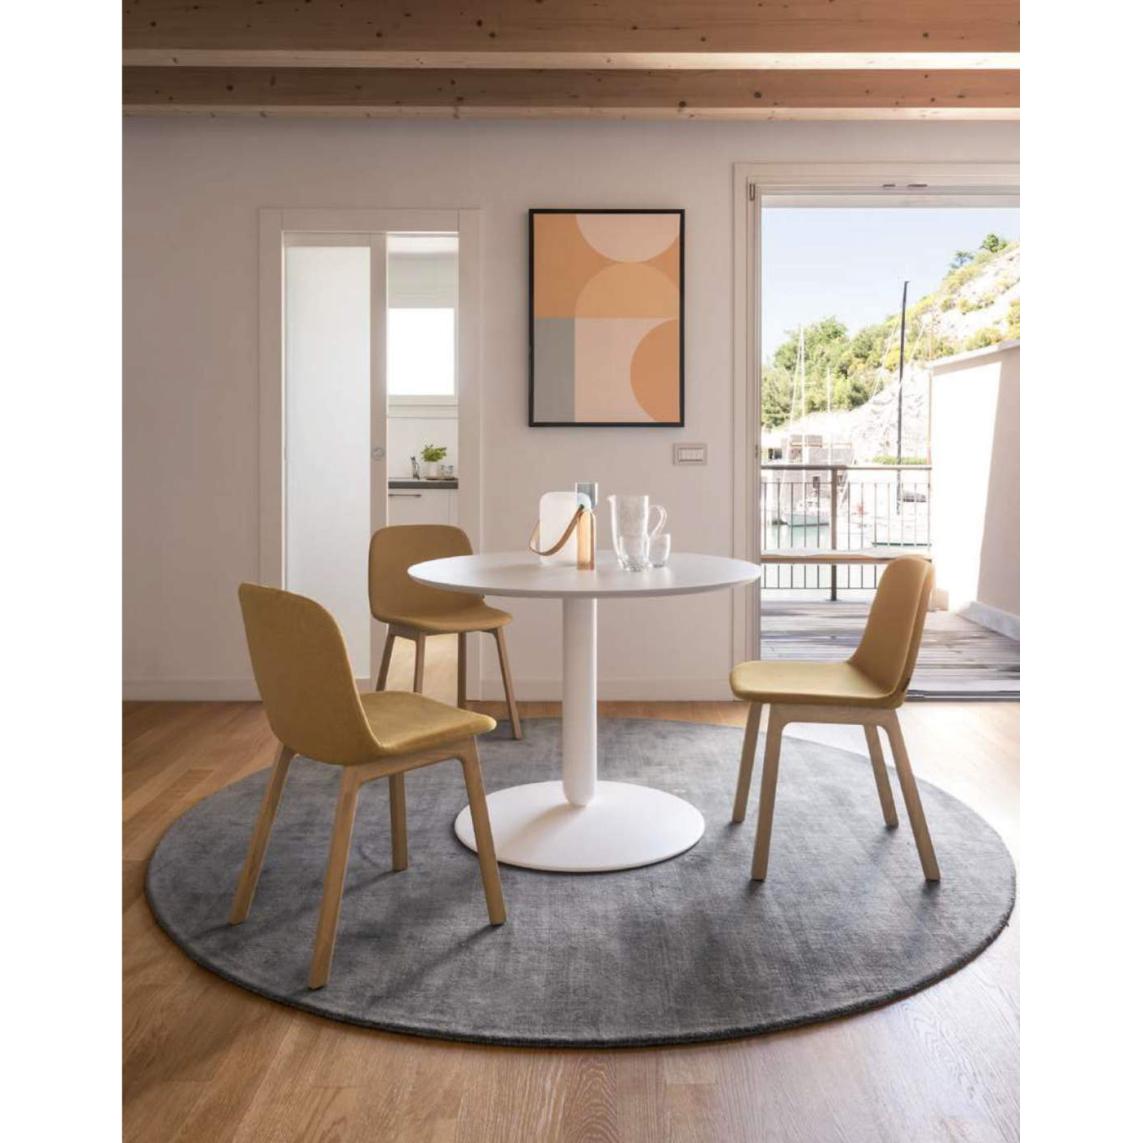 Calligaris Balance dining table // Balance étkezőasztal